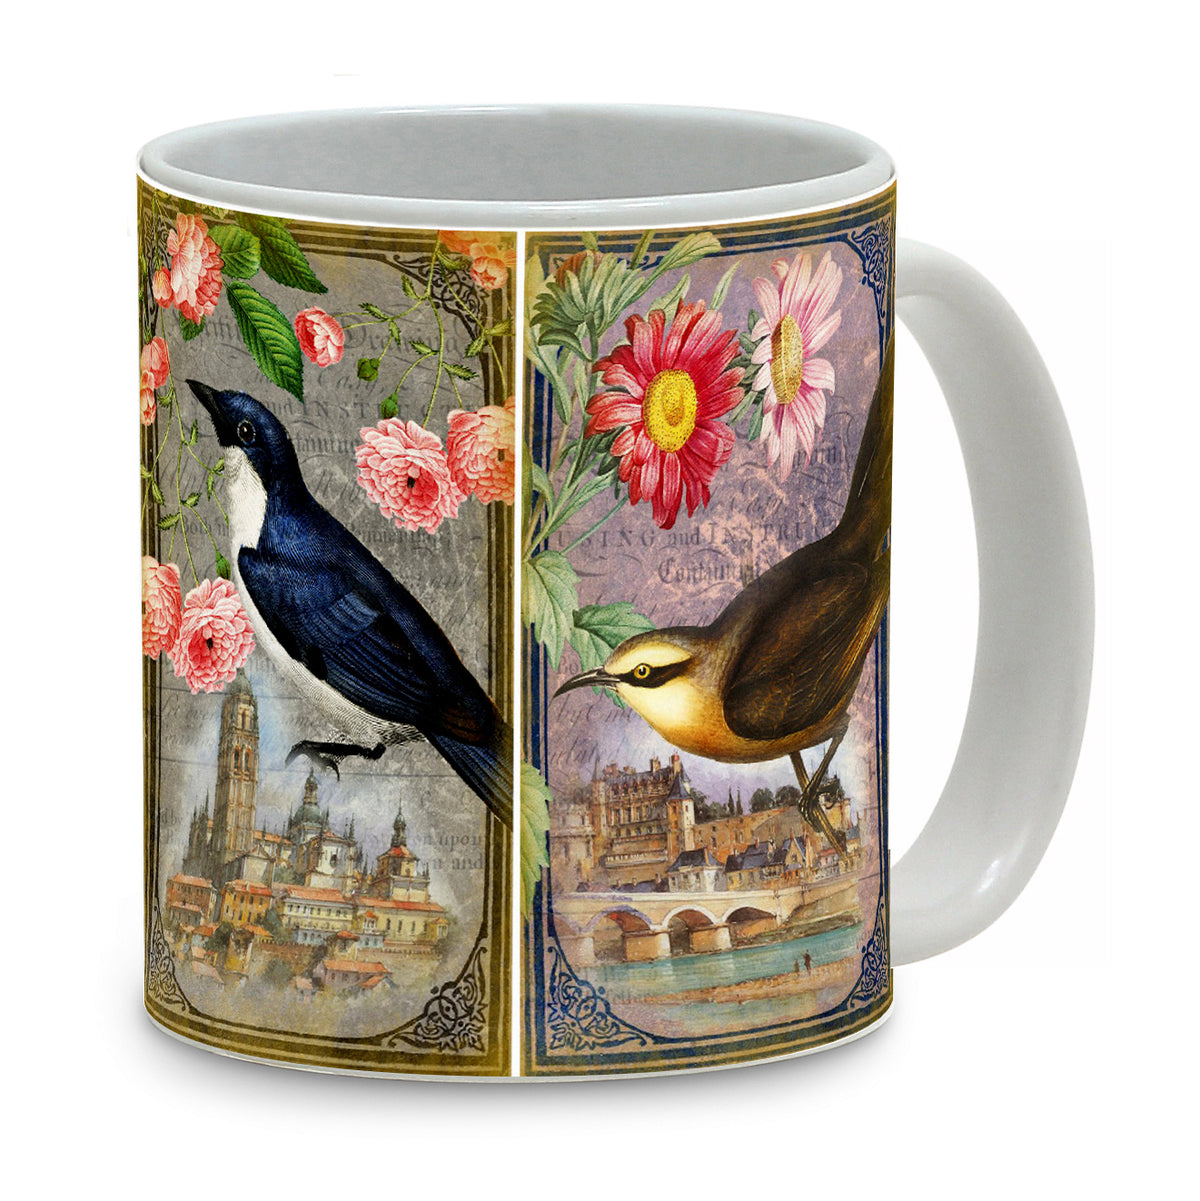 SUBLIMART: Pets Art - Beautiful Mug featuring a beautiful birds design - Artistica.com